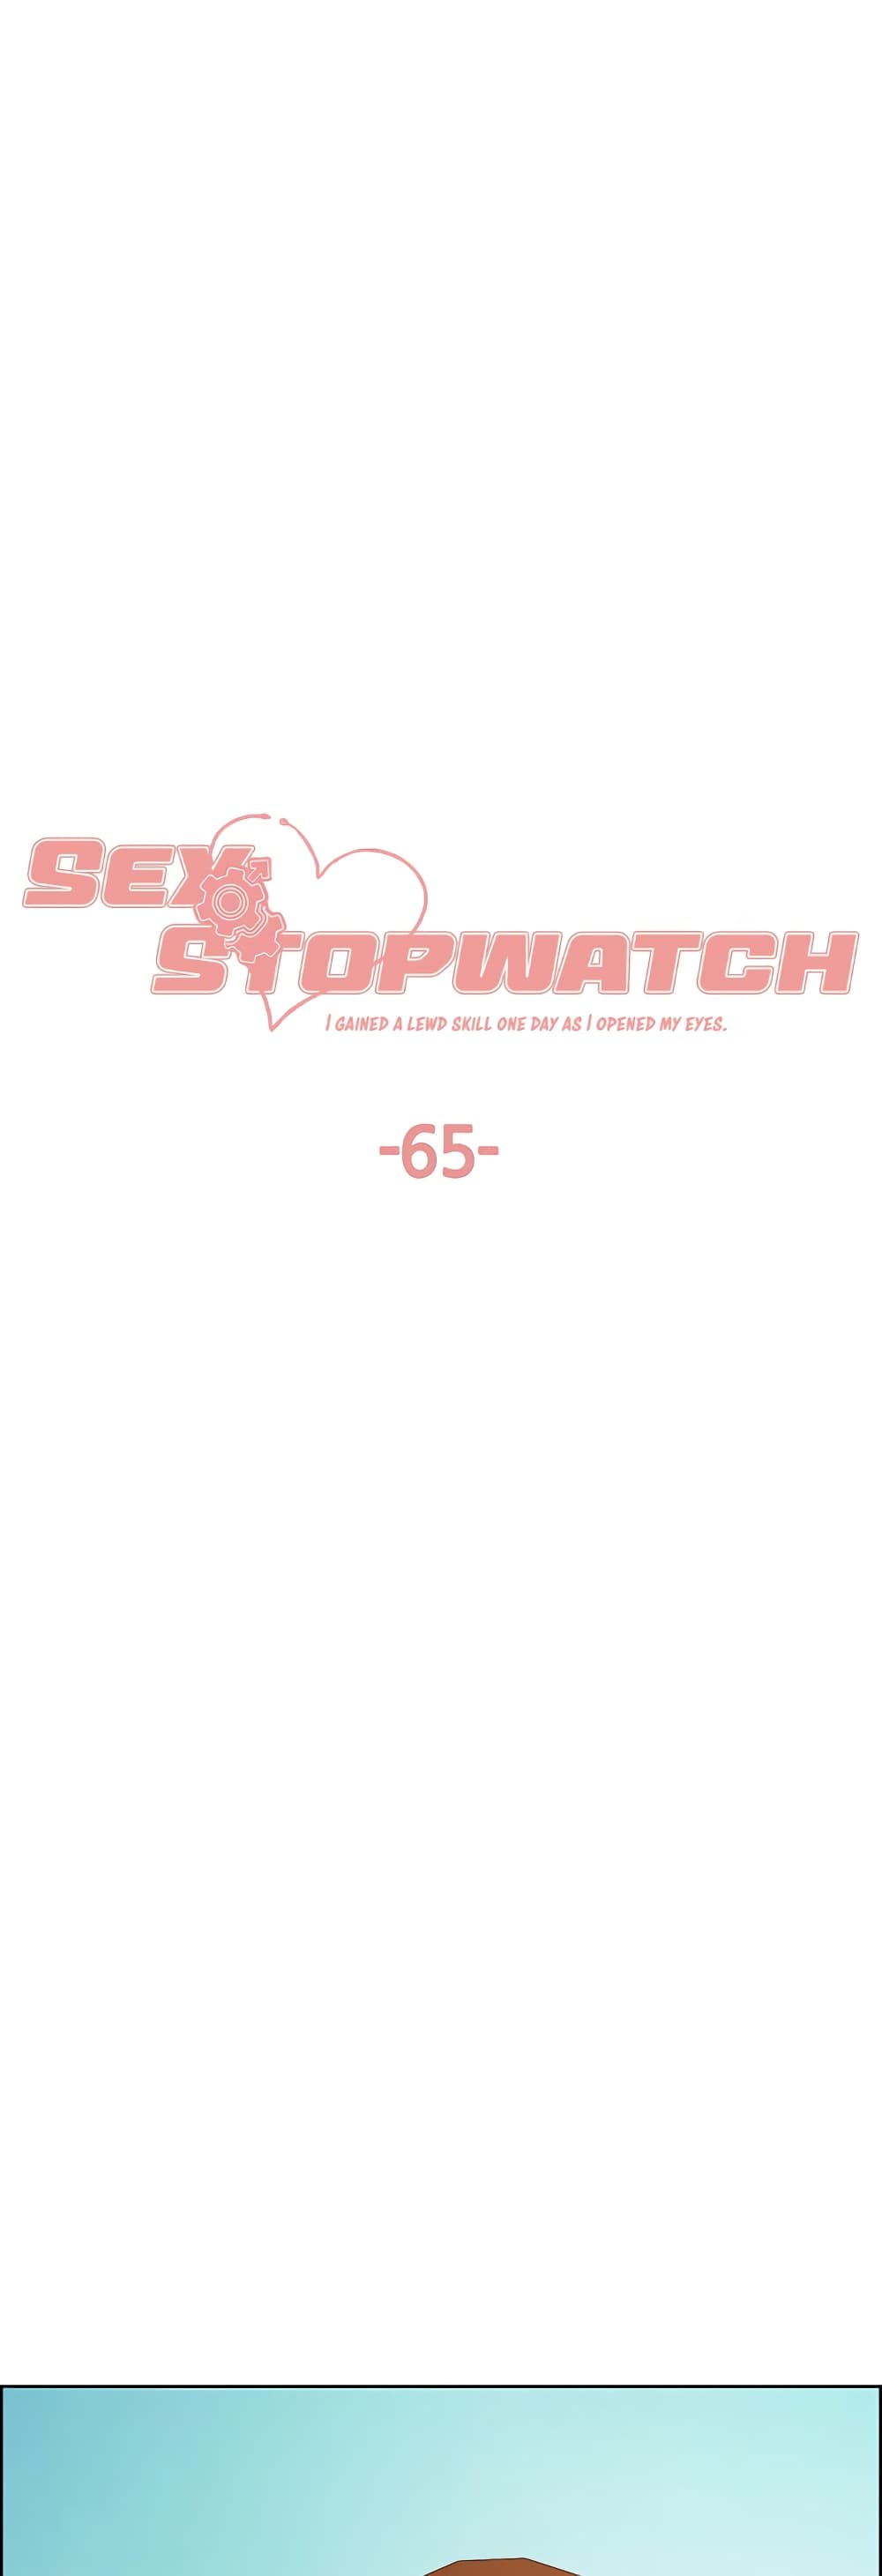 Sex-stop Watch 65-65